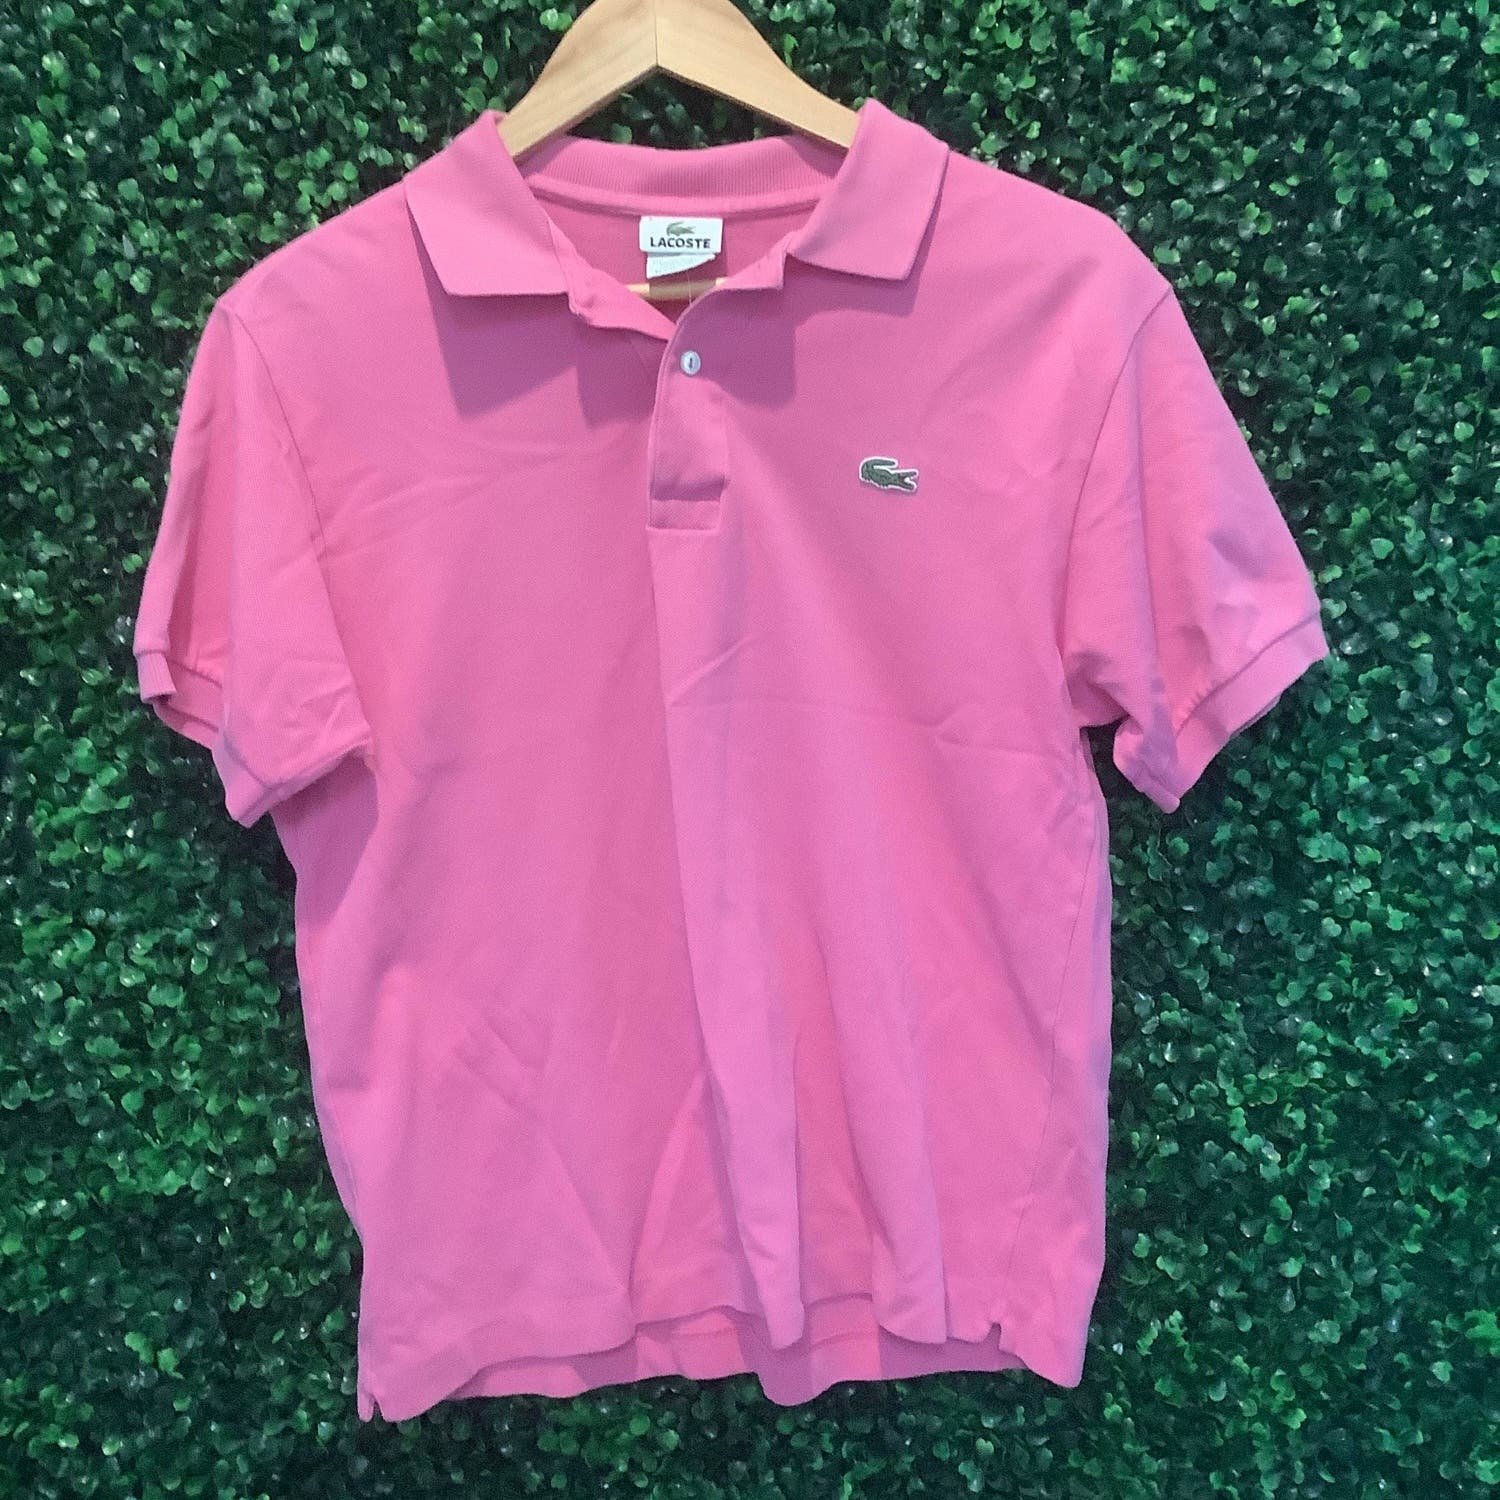 Wholesale price Lacoste Women’s Pink Polo Size 4 I8LAZ4